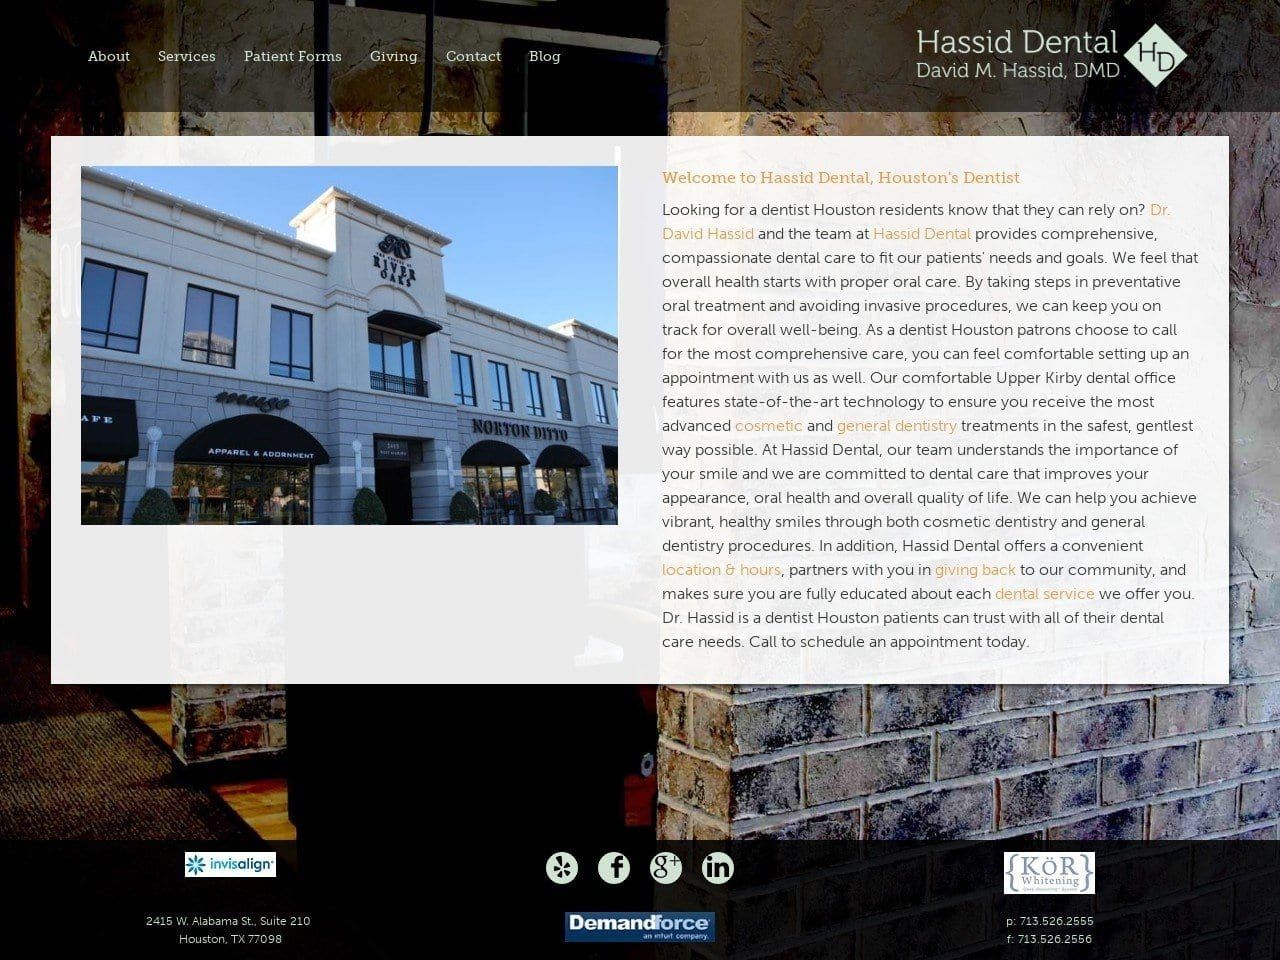 David M. Hassid DMD Website Screenshot from hassiddental.com